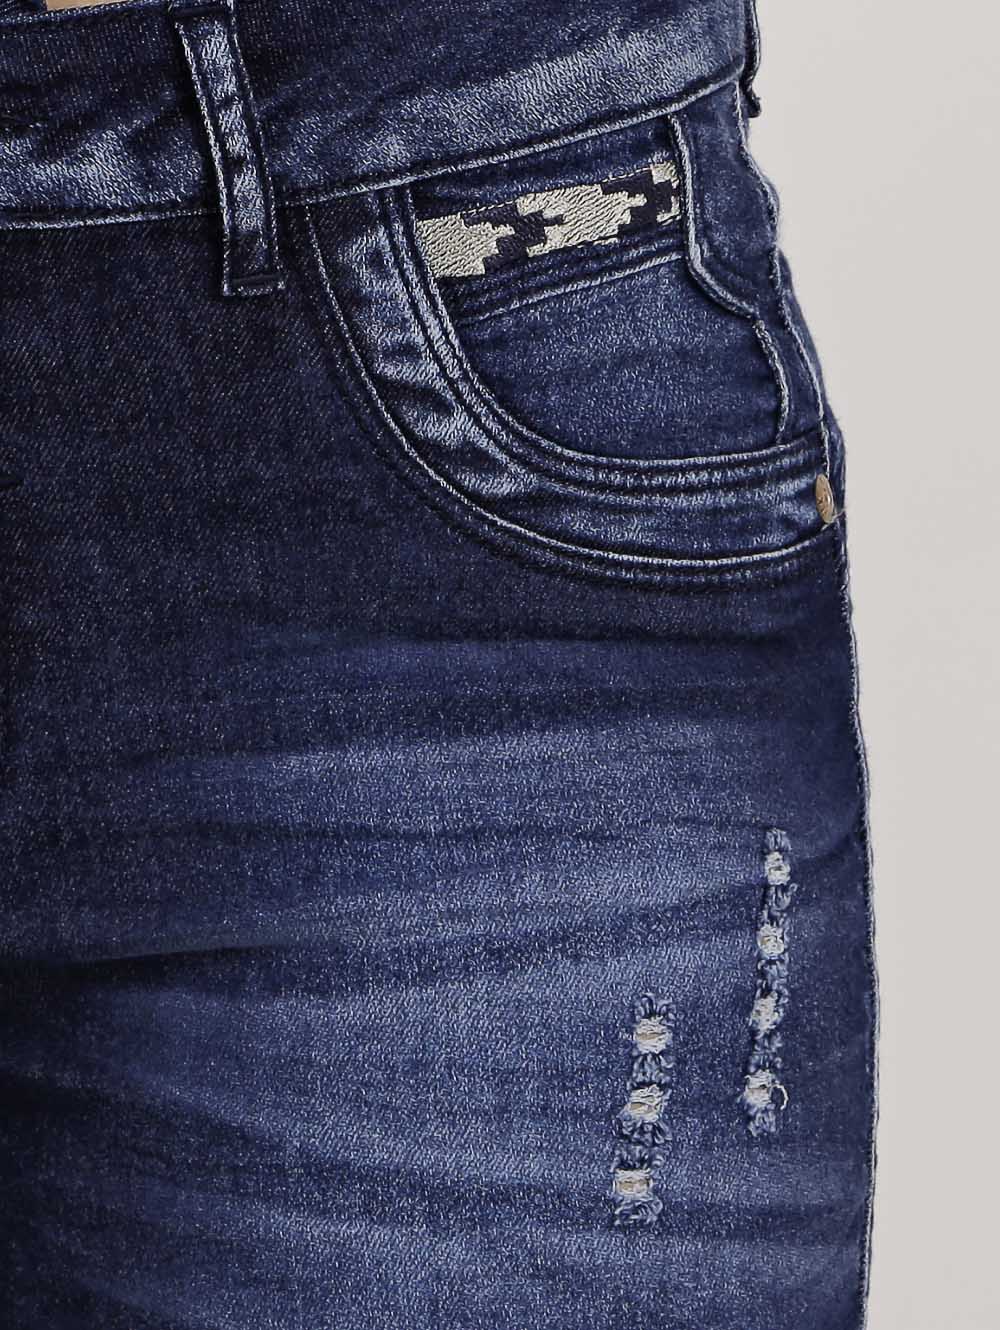 calca jeans feminina 48